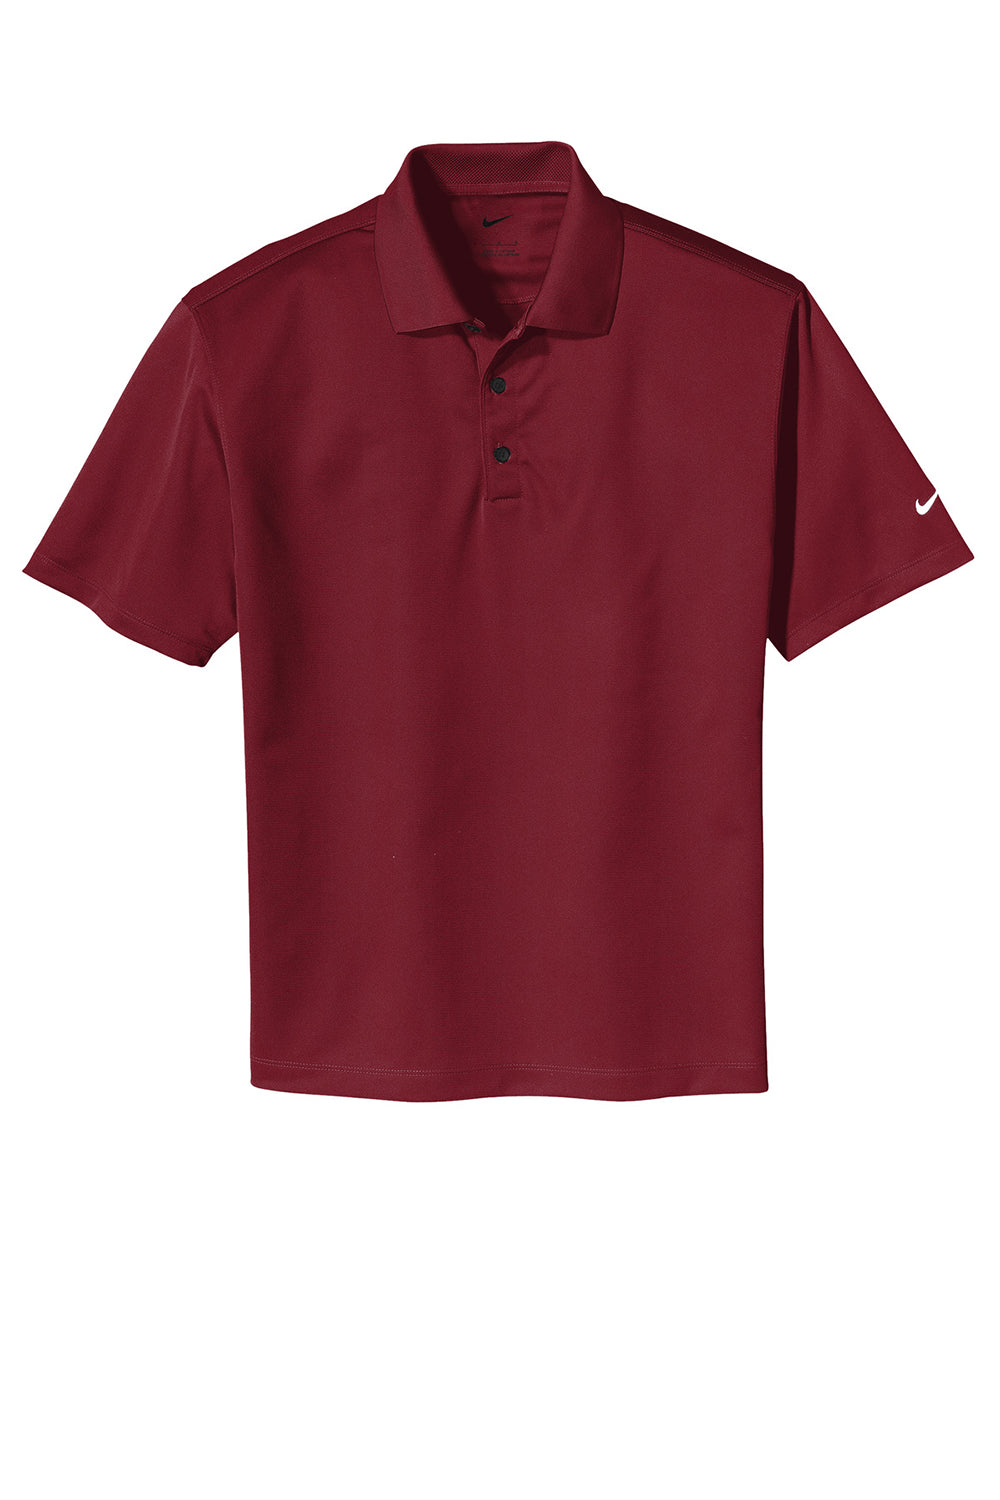 Nike 203690 Mens Tech Basic Dri-Fit Moisture Wicking Short Sleeve Polo Shirt Team Red Flat Front